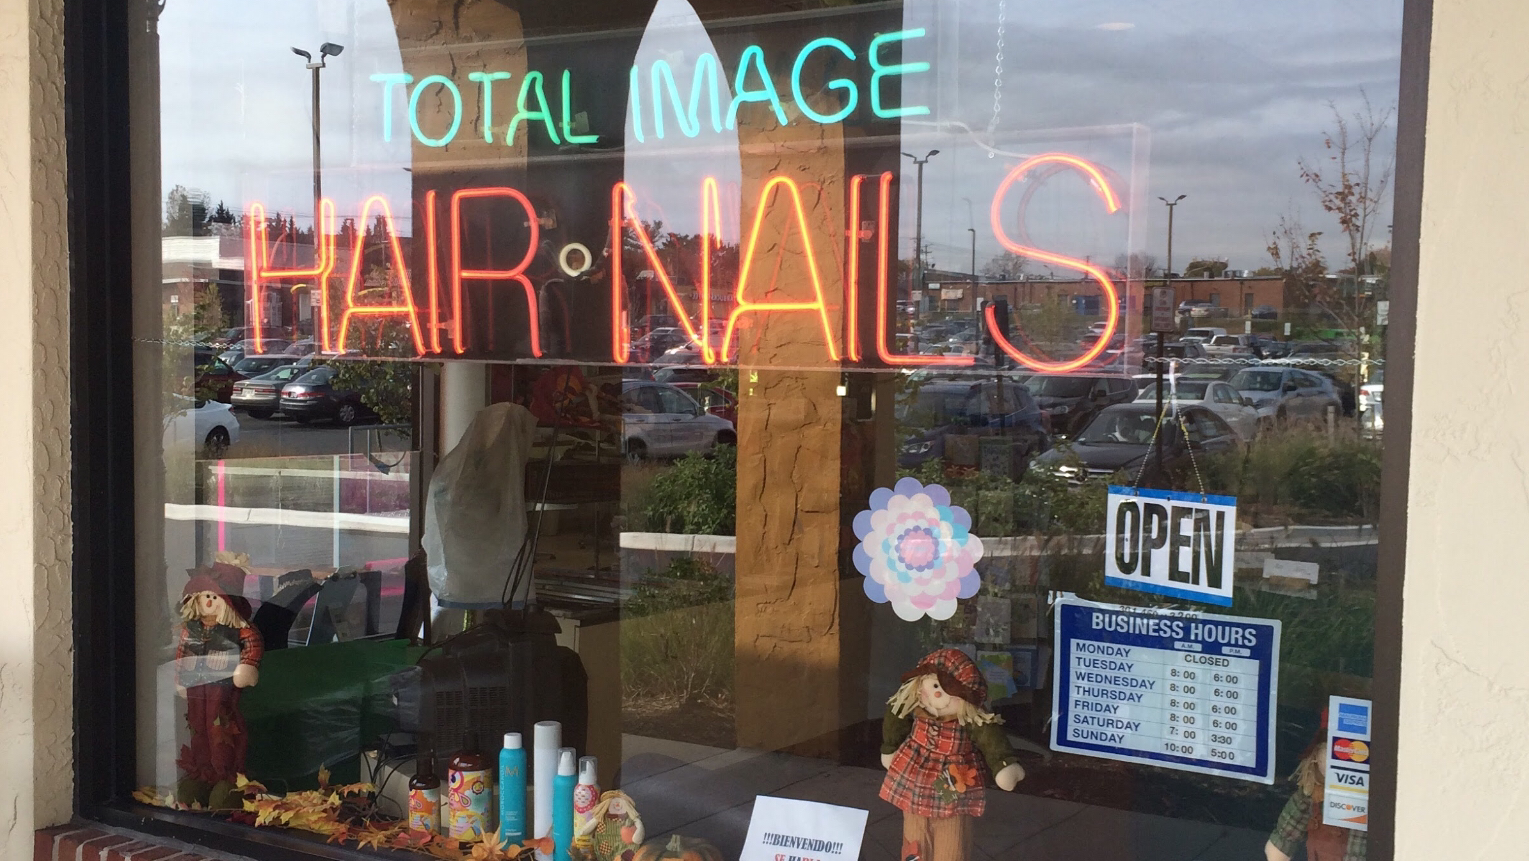 Total Image Salon